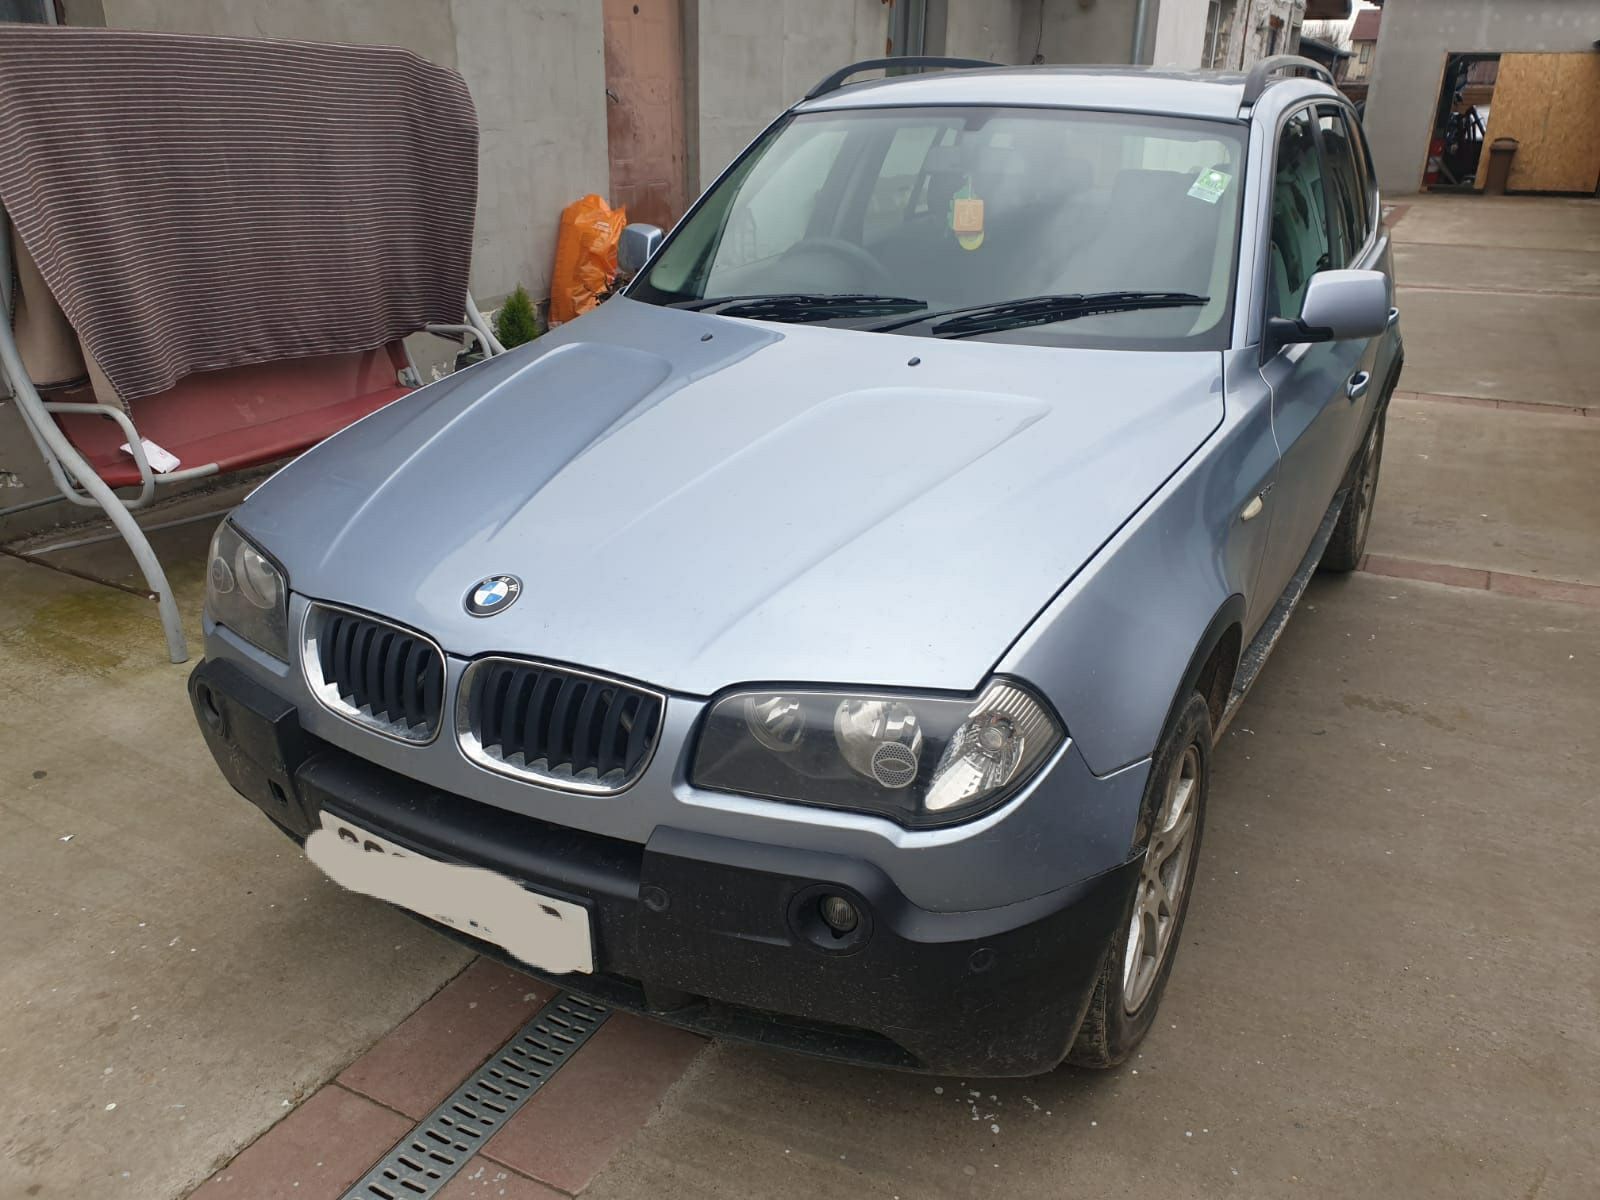 Dezmembrez BMW X3 E83 2.0 diesel 150 cp an 2005 cod mot M47 D20 euro 4